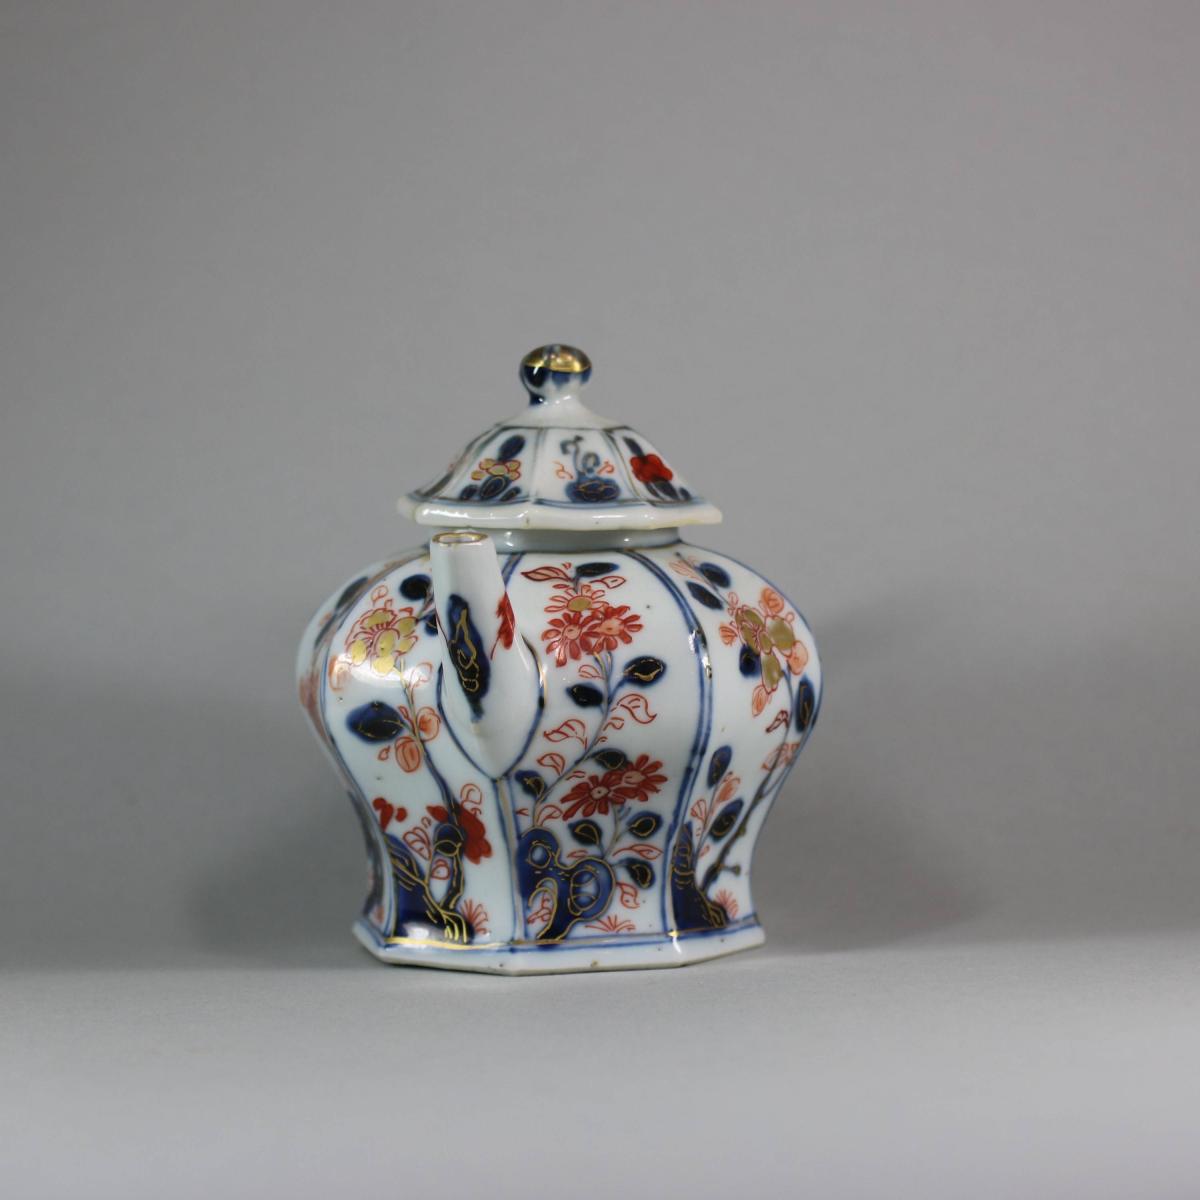 Spout of Imari teapot 18th century